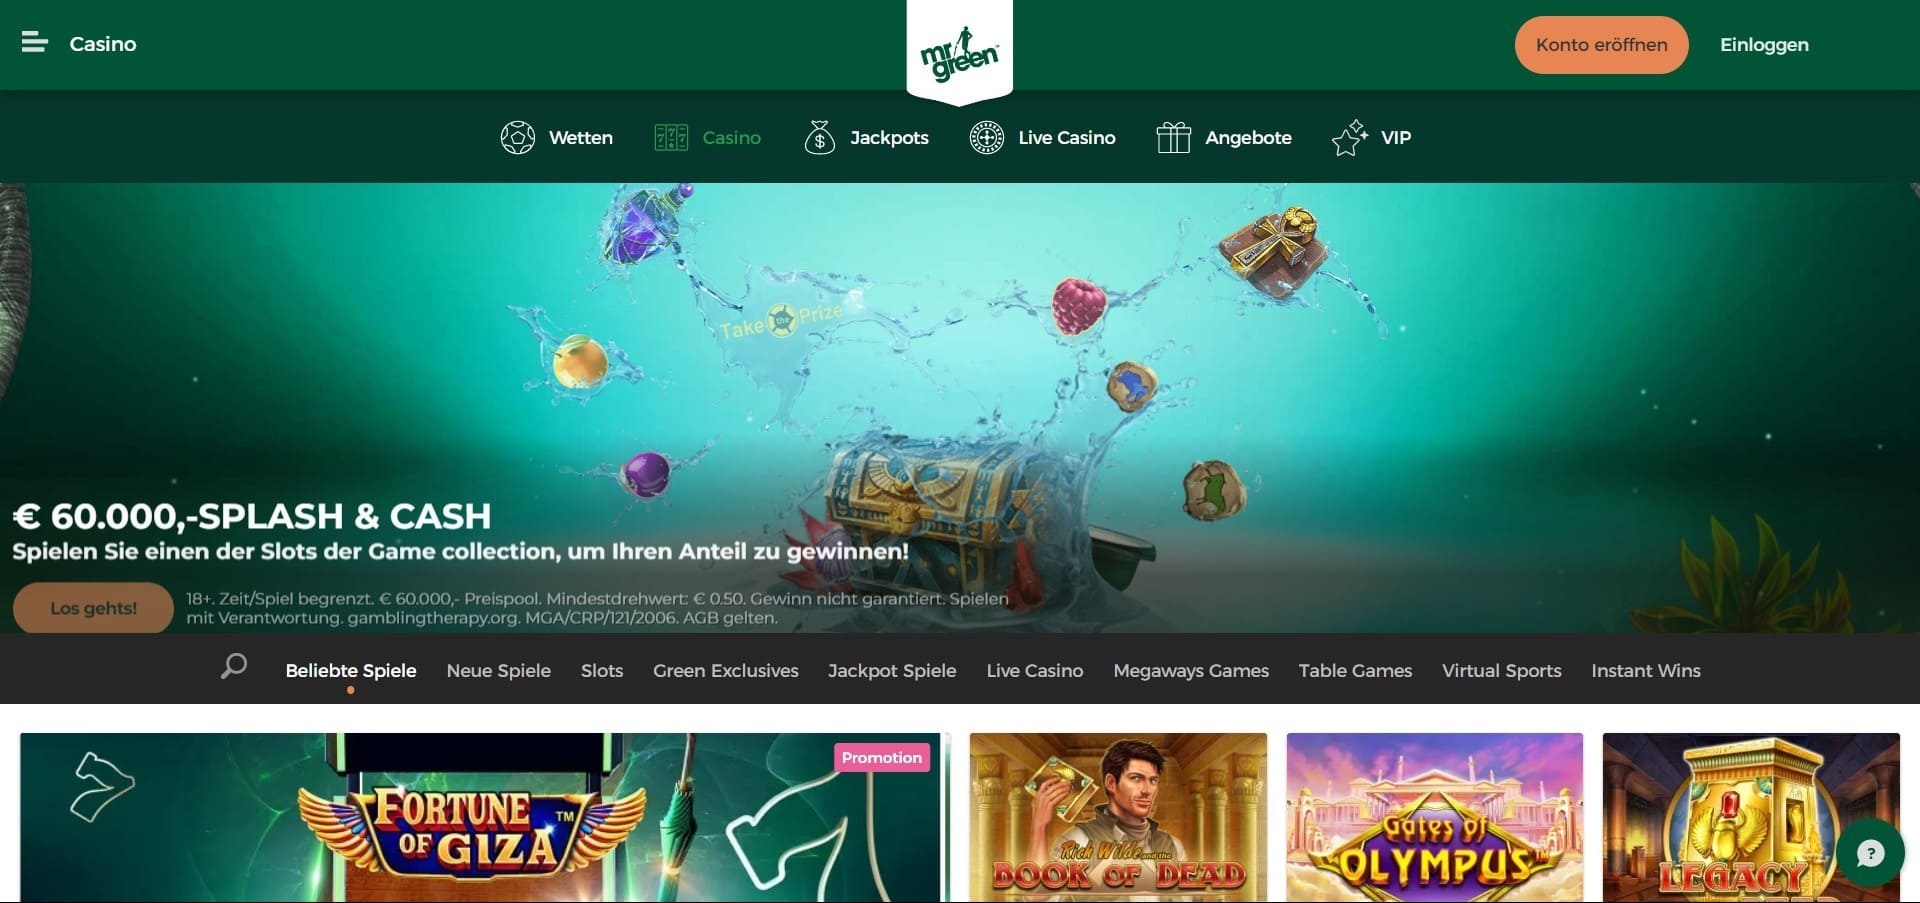 Offizielle Website der Mr Green Casino